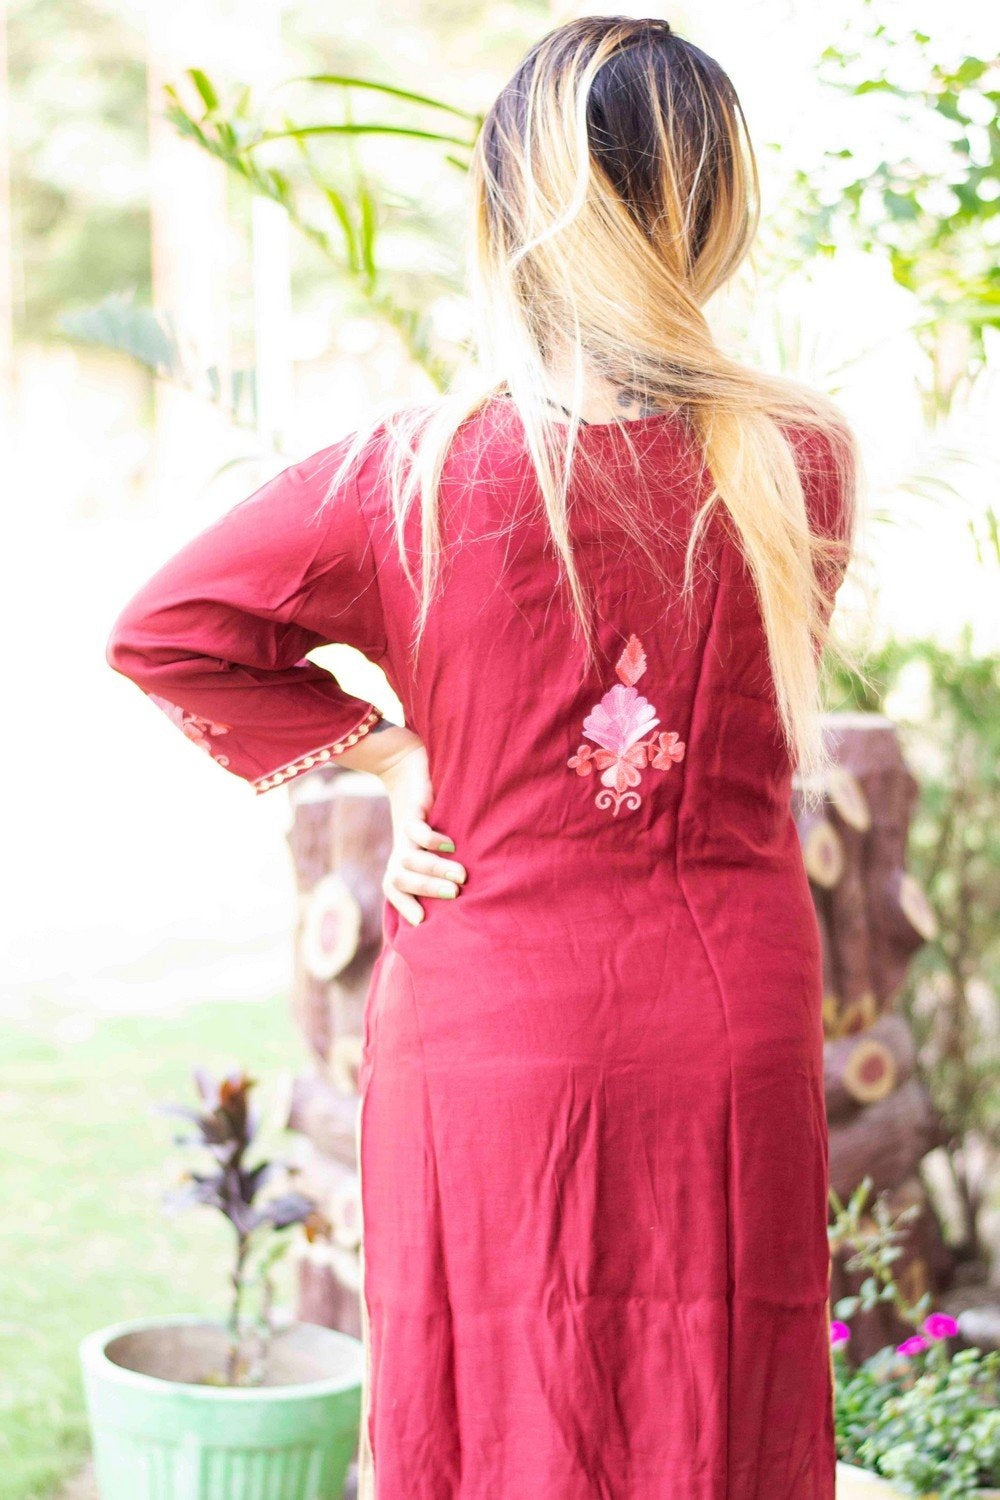 Maroon Colour Cotton Kurti With Beautiful Aari Embroidery